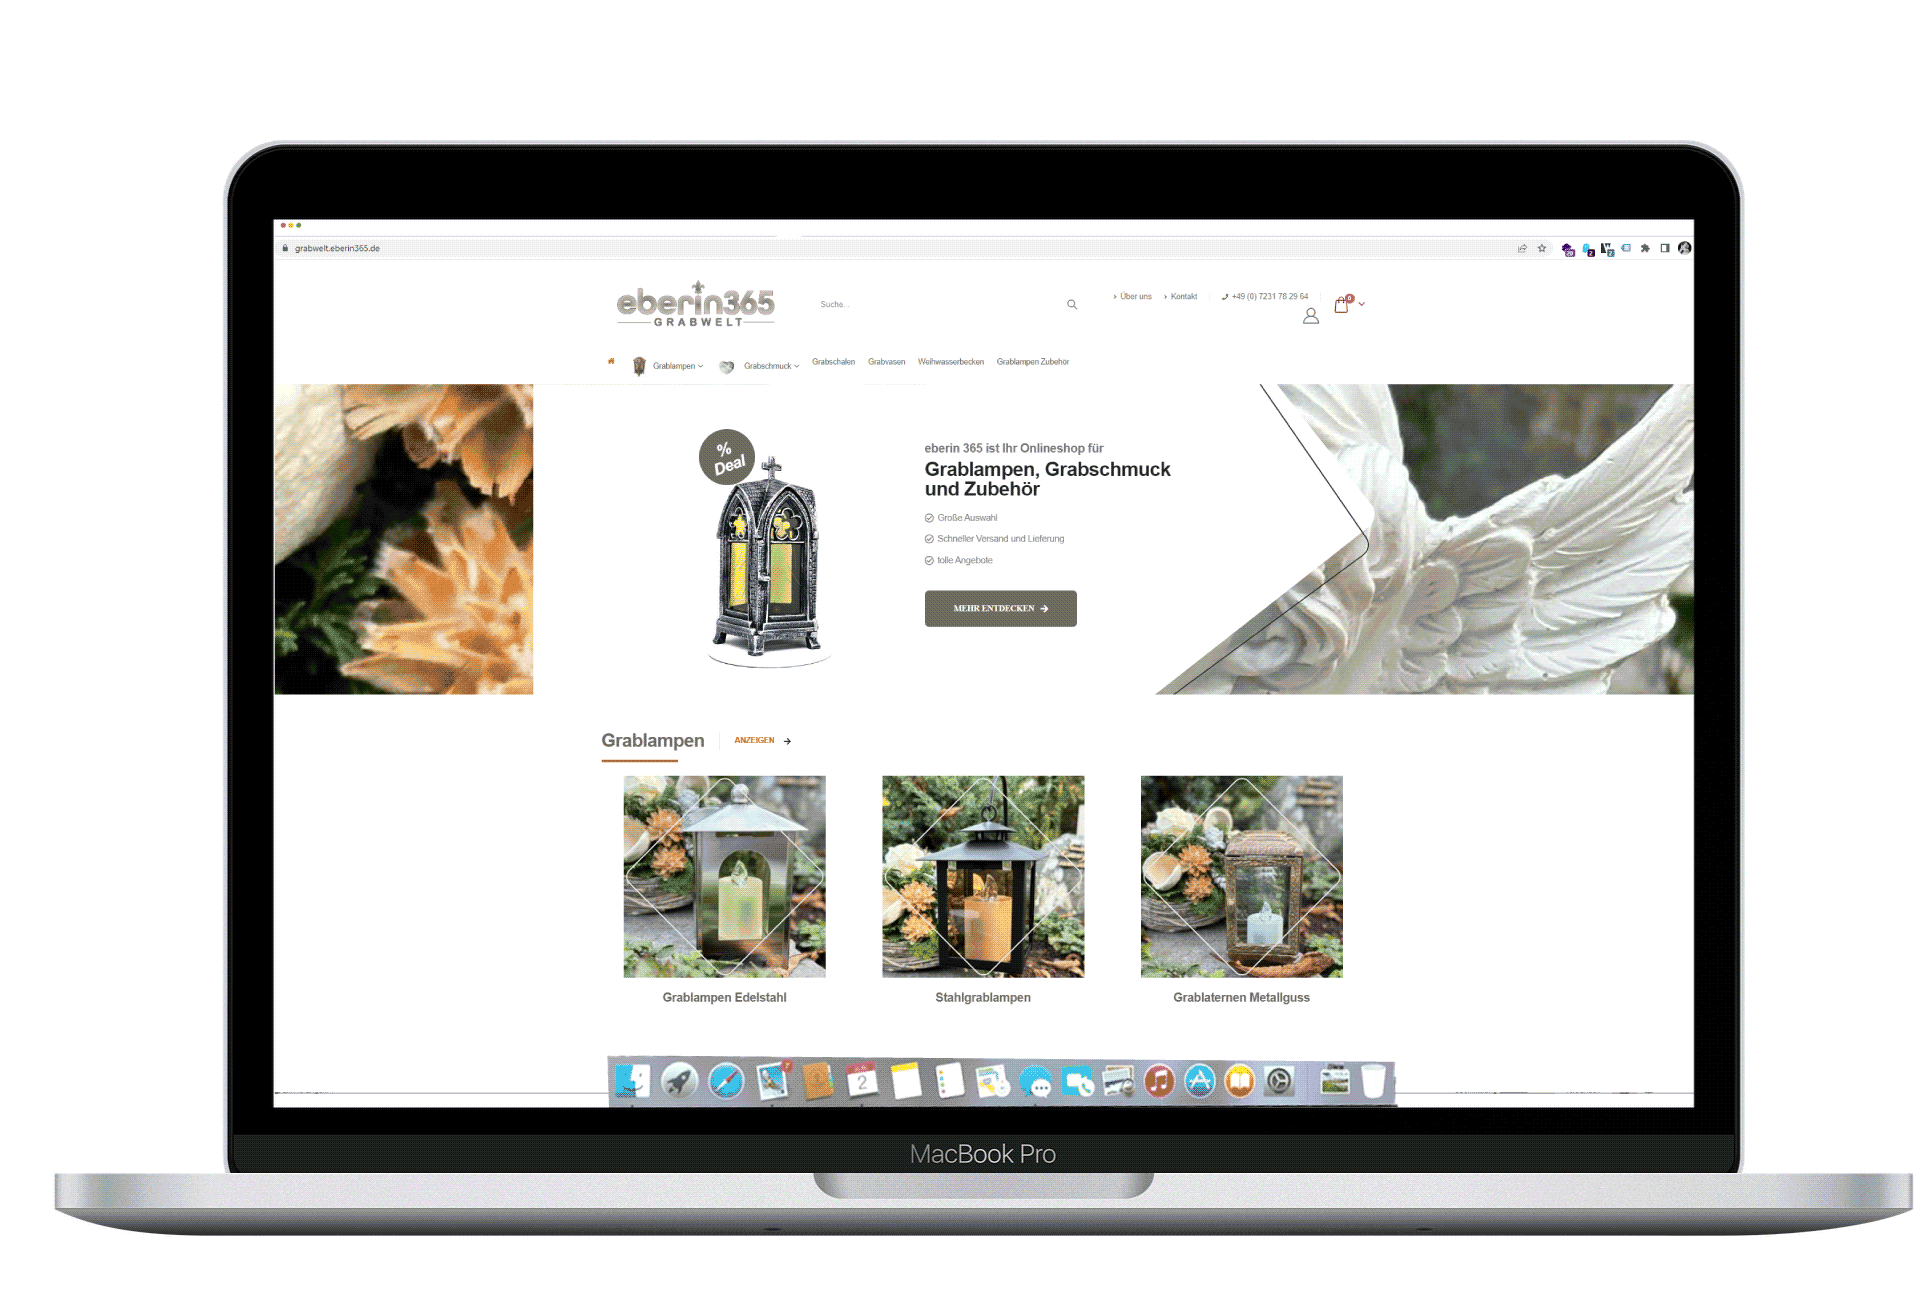 Webdesign eberin365 Grabwelt Online Shop Grablampen Grabschmuck